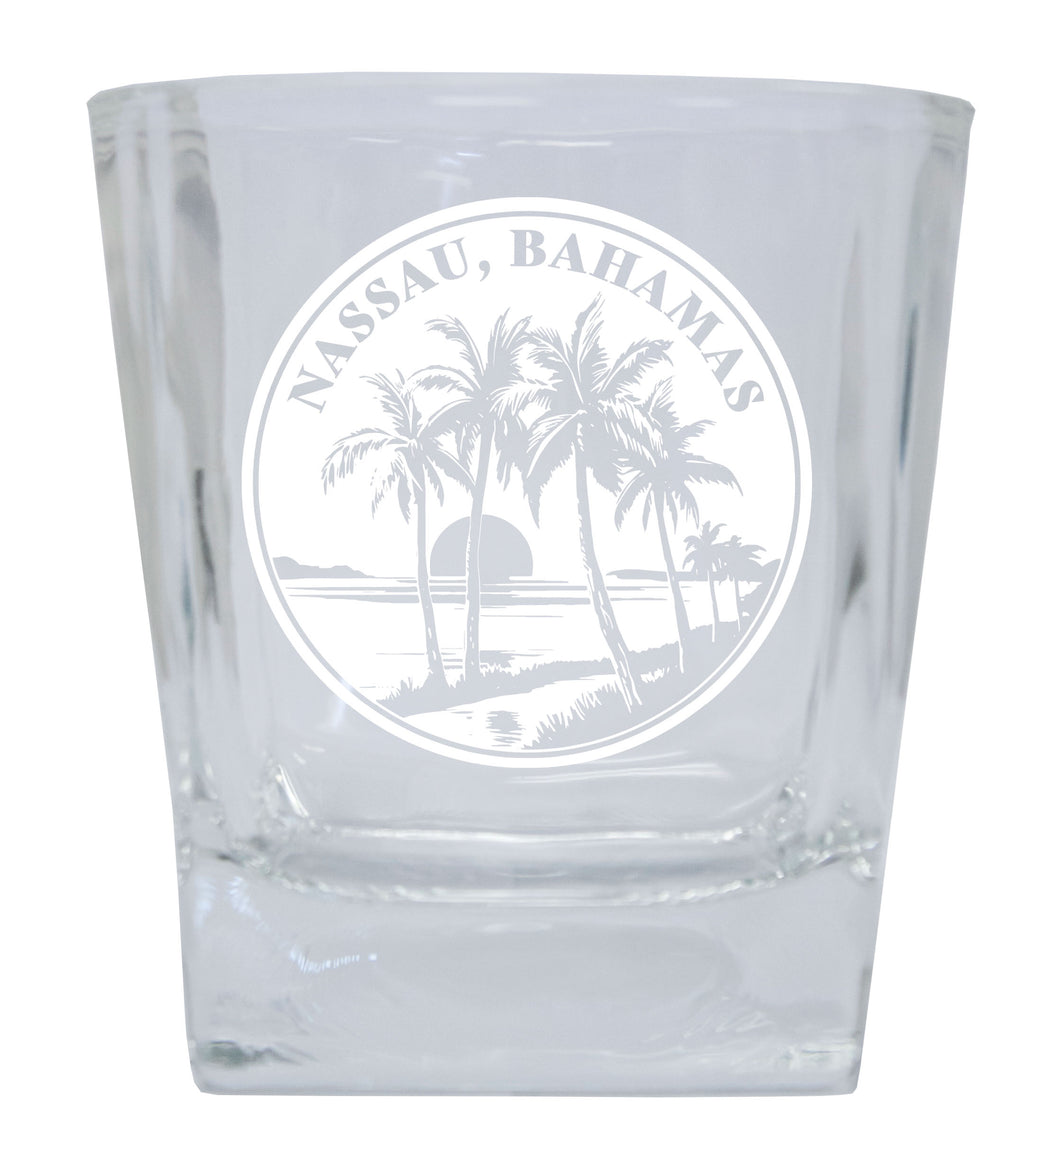 Nassau the Bahamas Souvenir 5 oz Engraved Shooter Glass